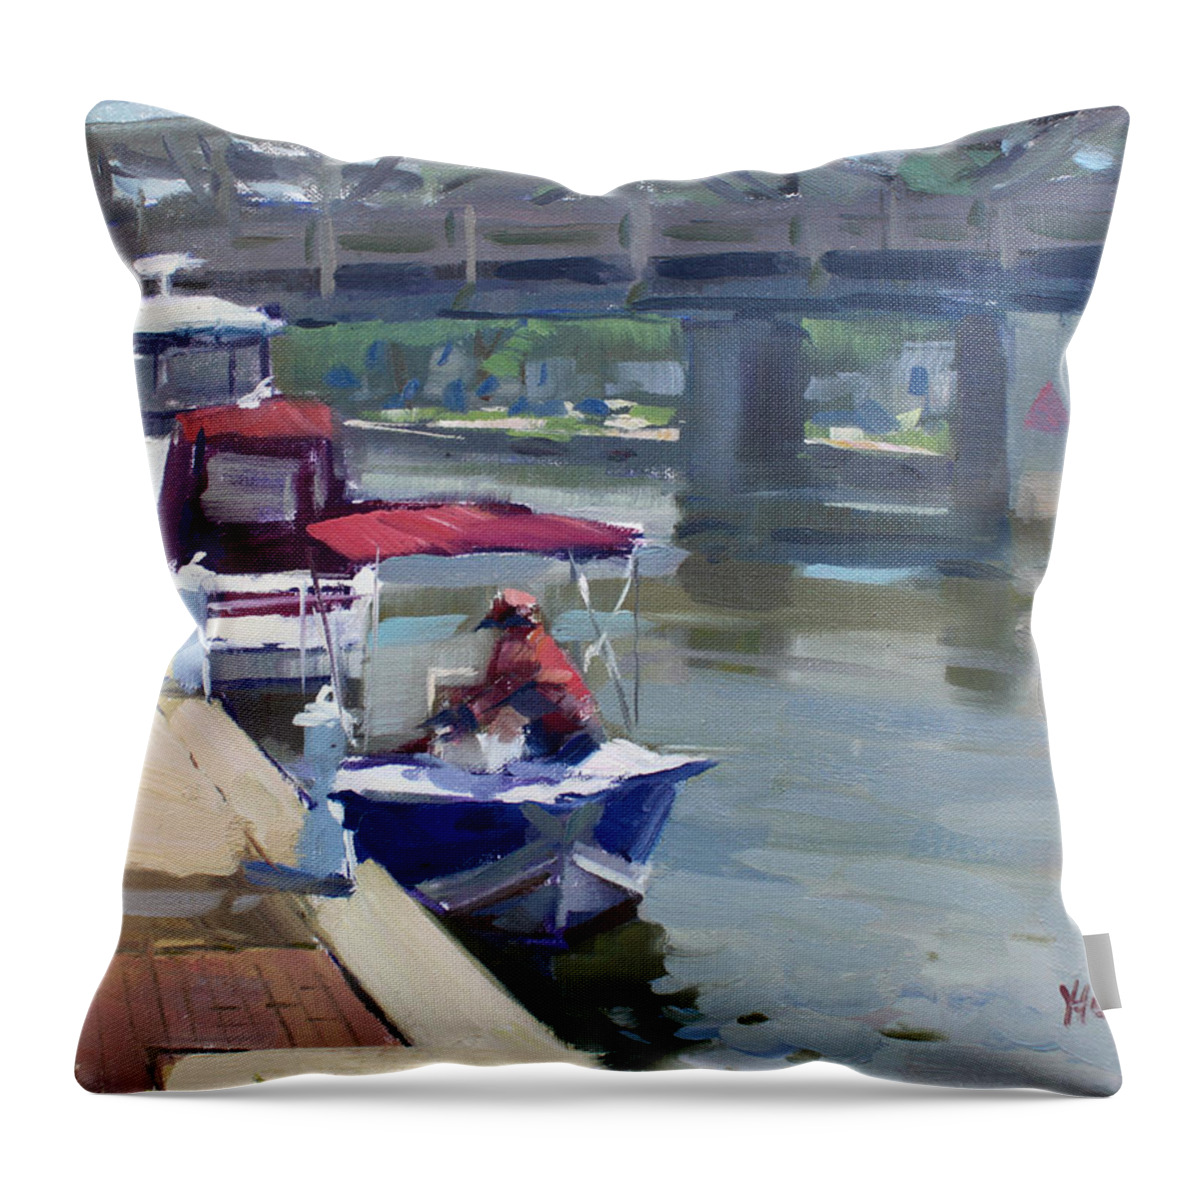 Boats Throw Pillow featuring the painting Boats At North Tonawanda Canal by Ylli Haruni